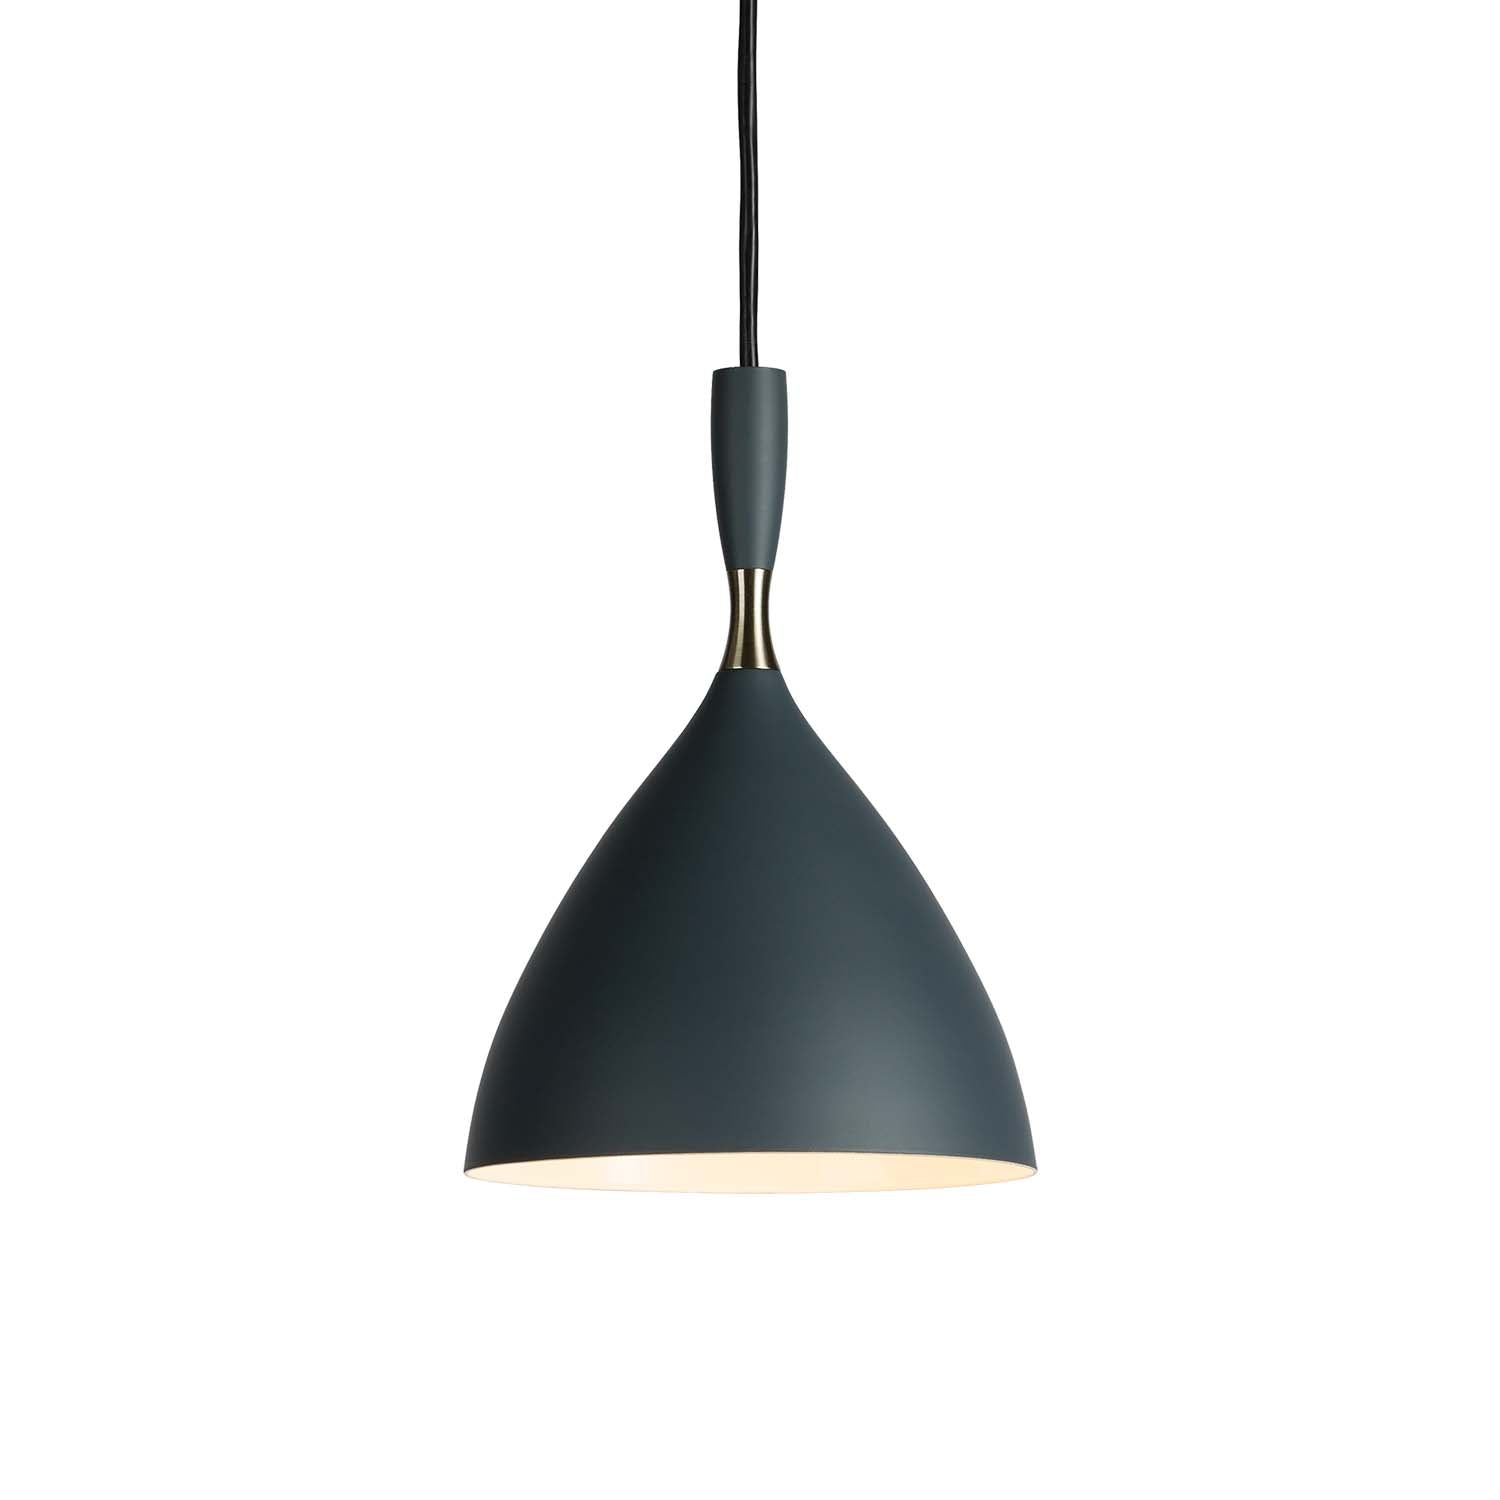 DOKKA - Scandinavian design and vintage pendant lamp for living room